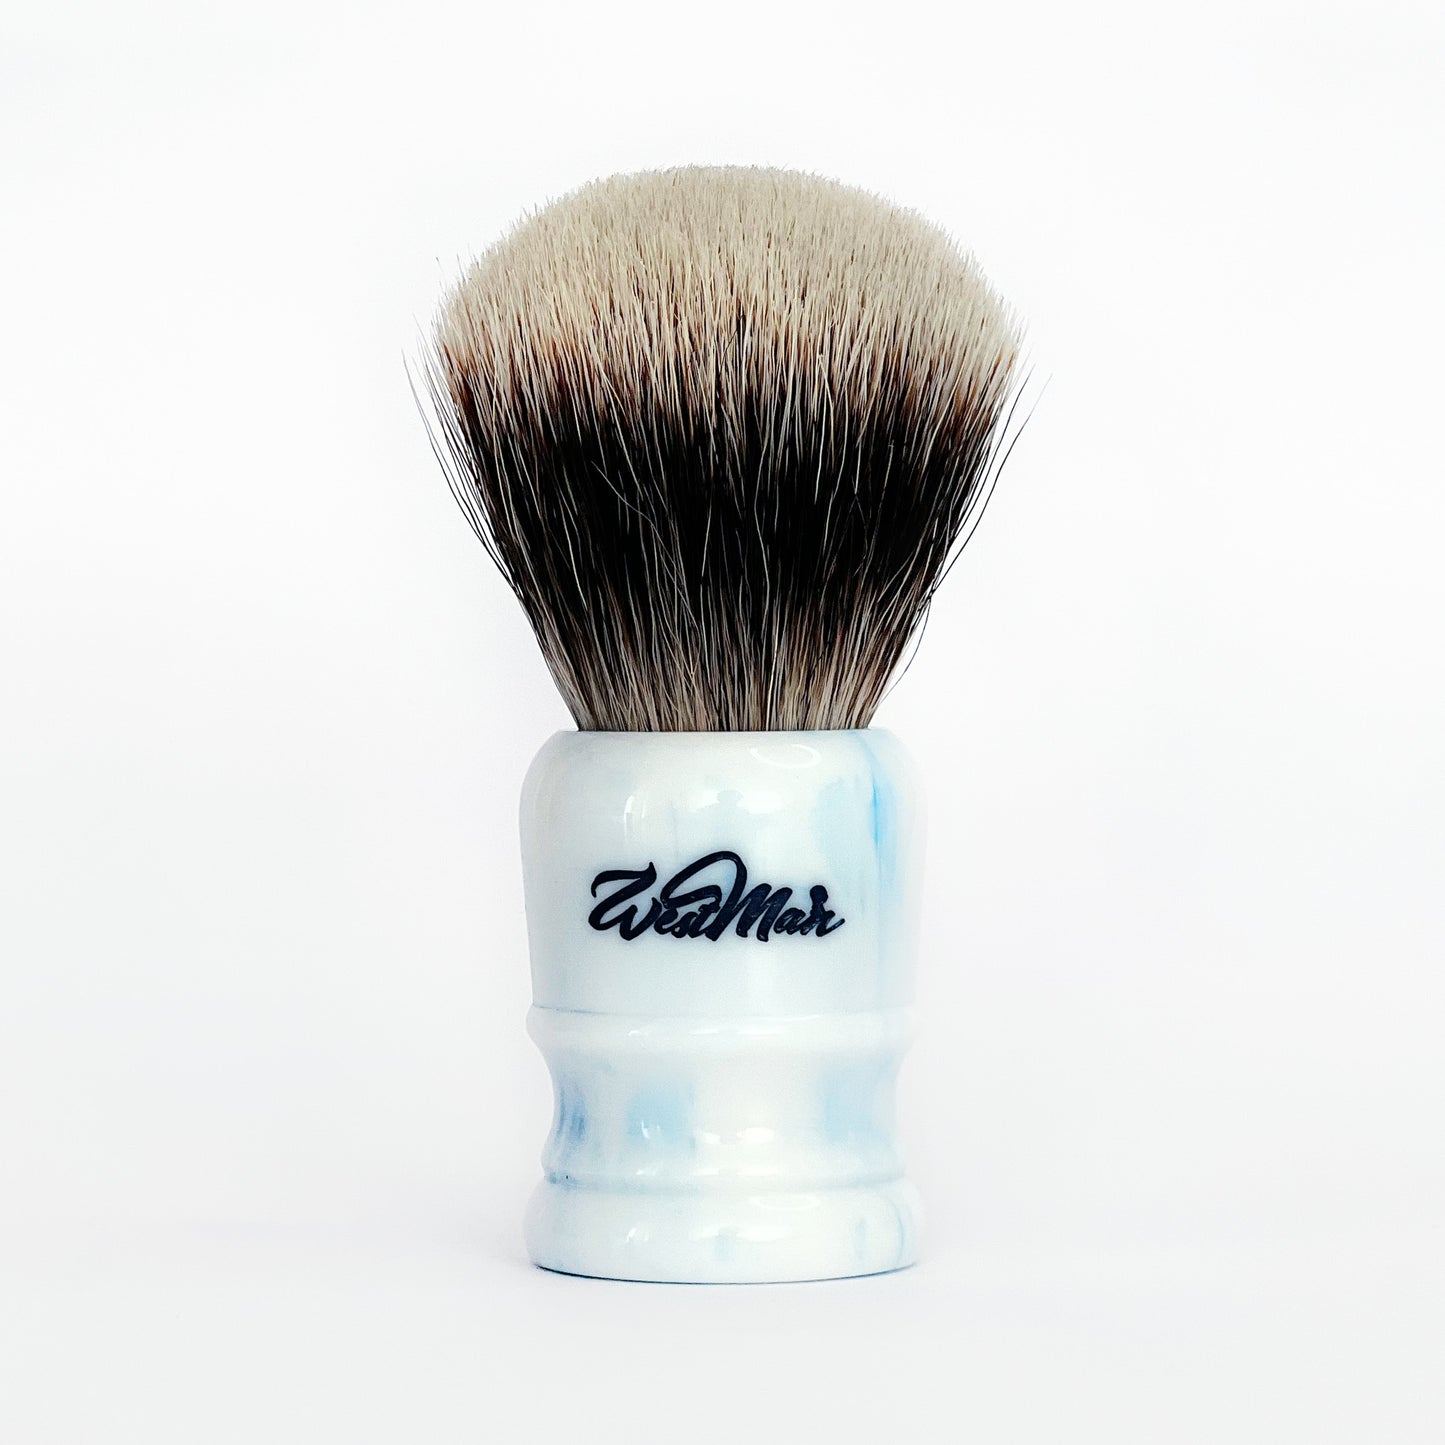 Adamastor Finest Badger Shaving Brush